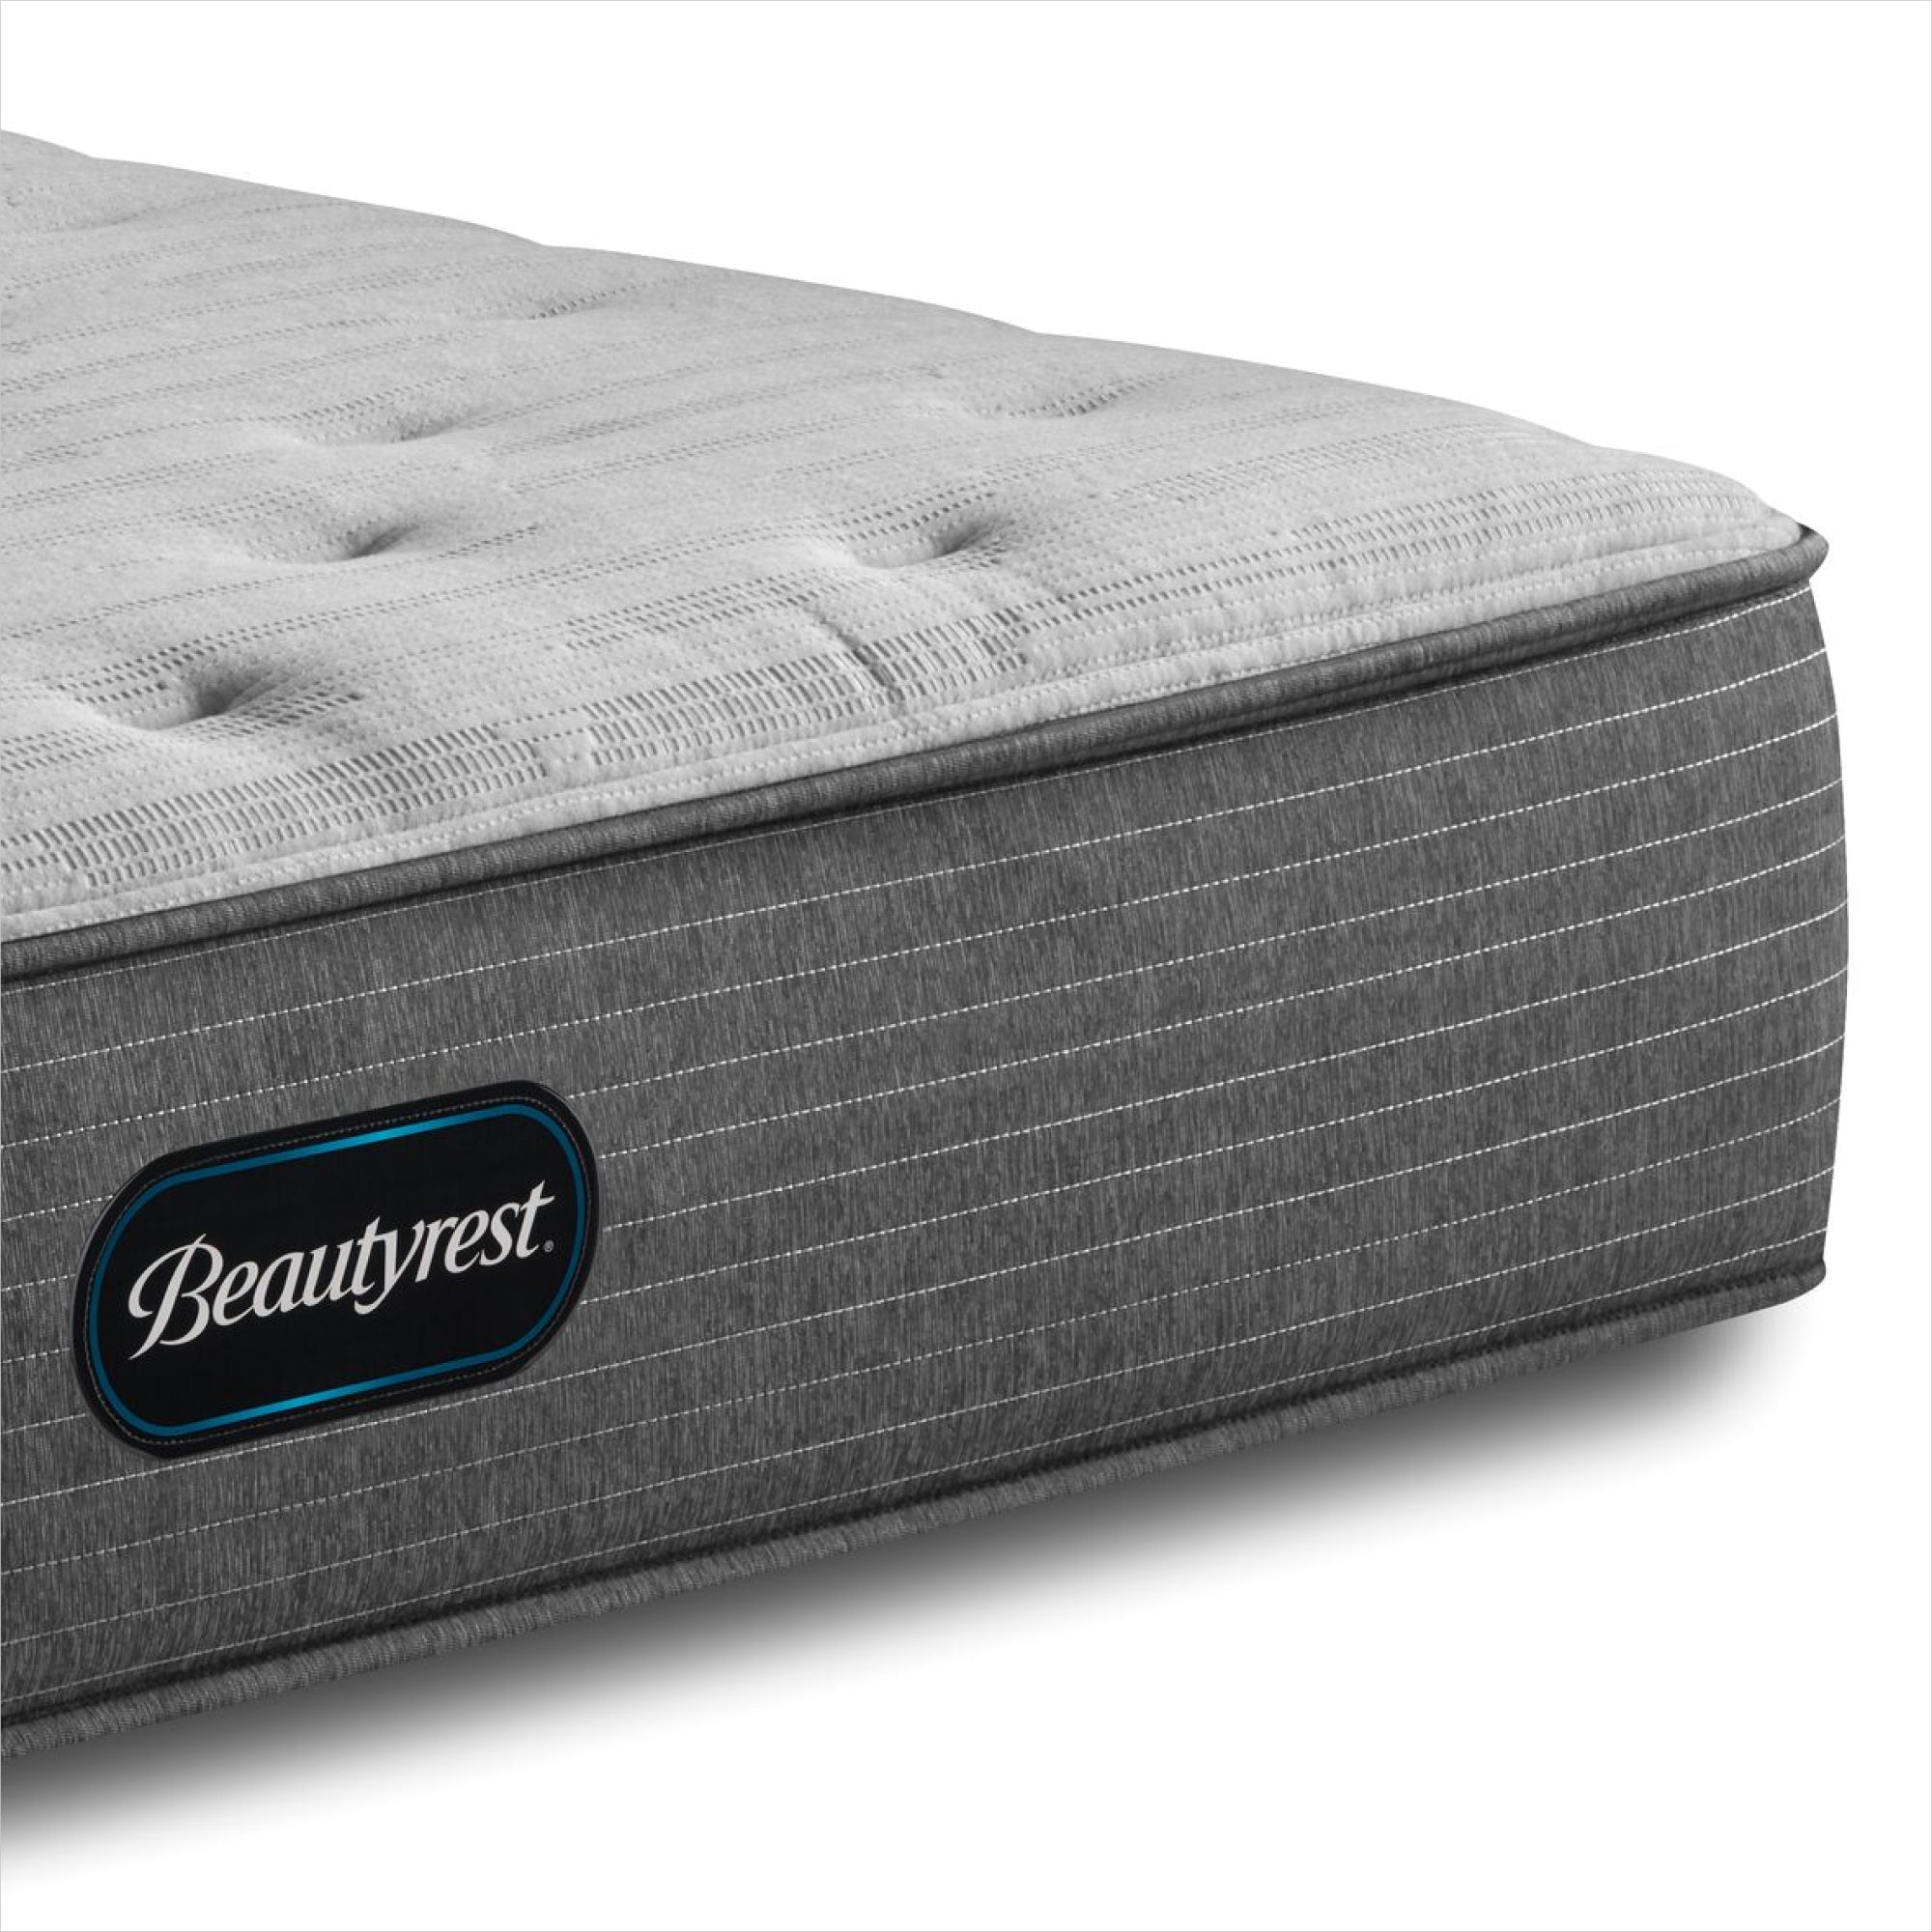 Corner view of the Beautyrest Select mattress ||feel: Plush